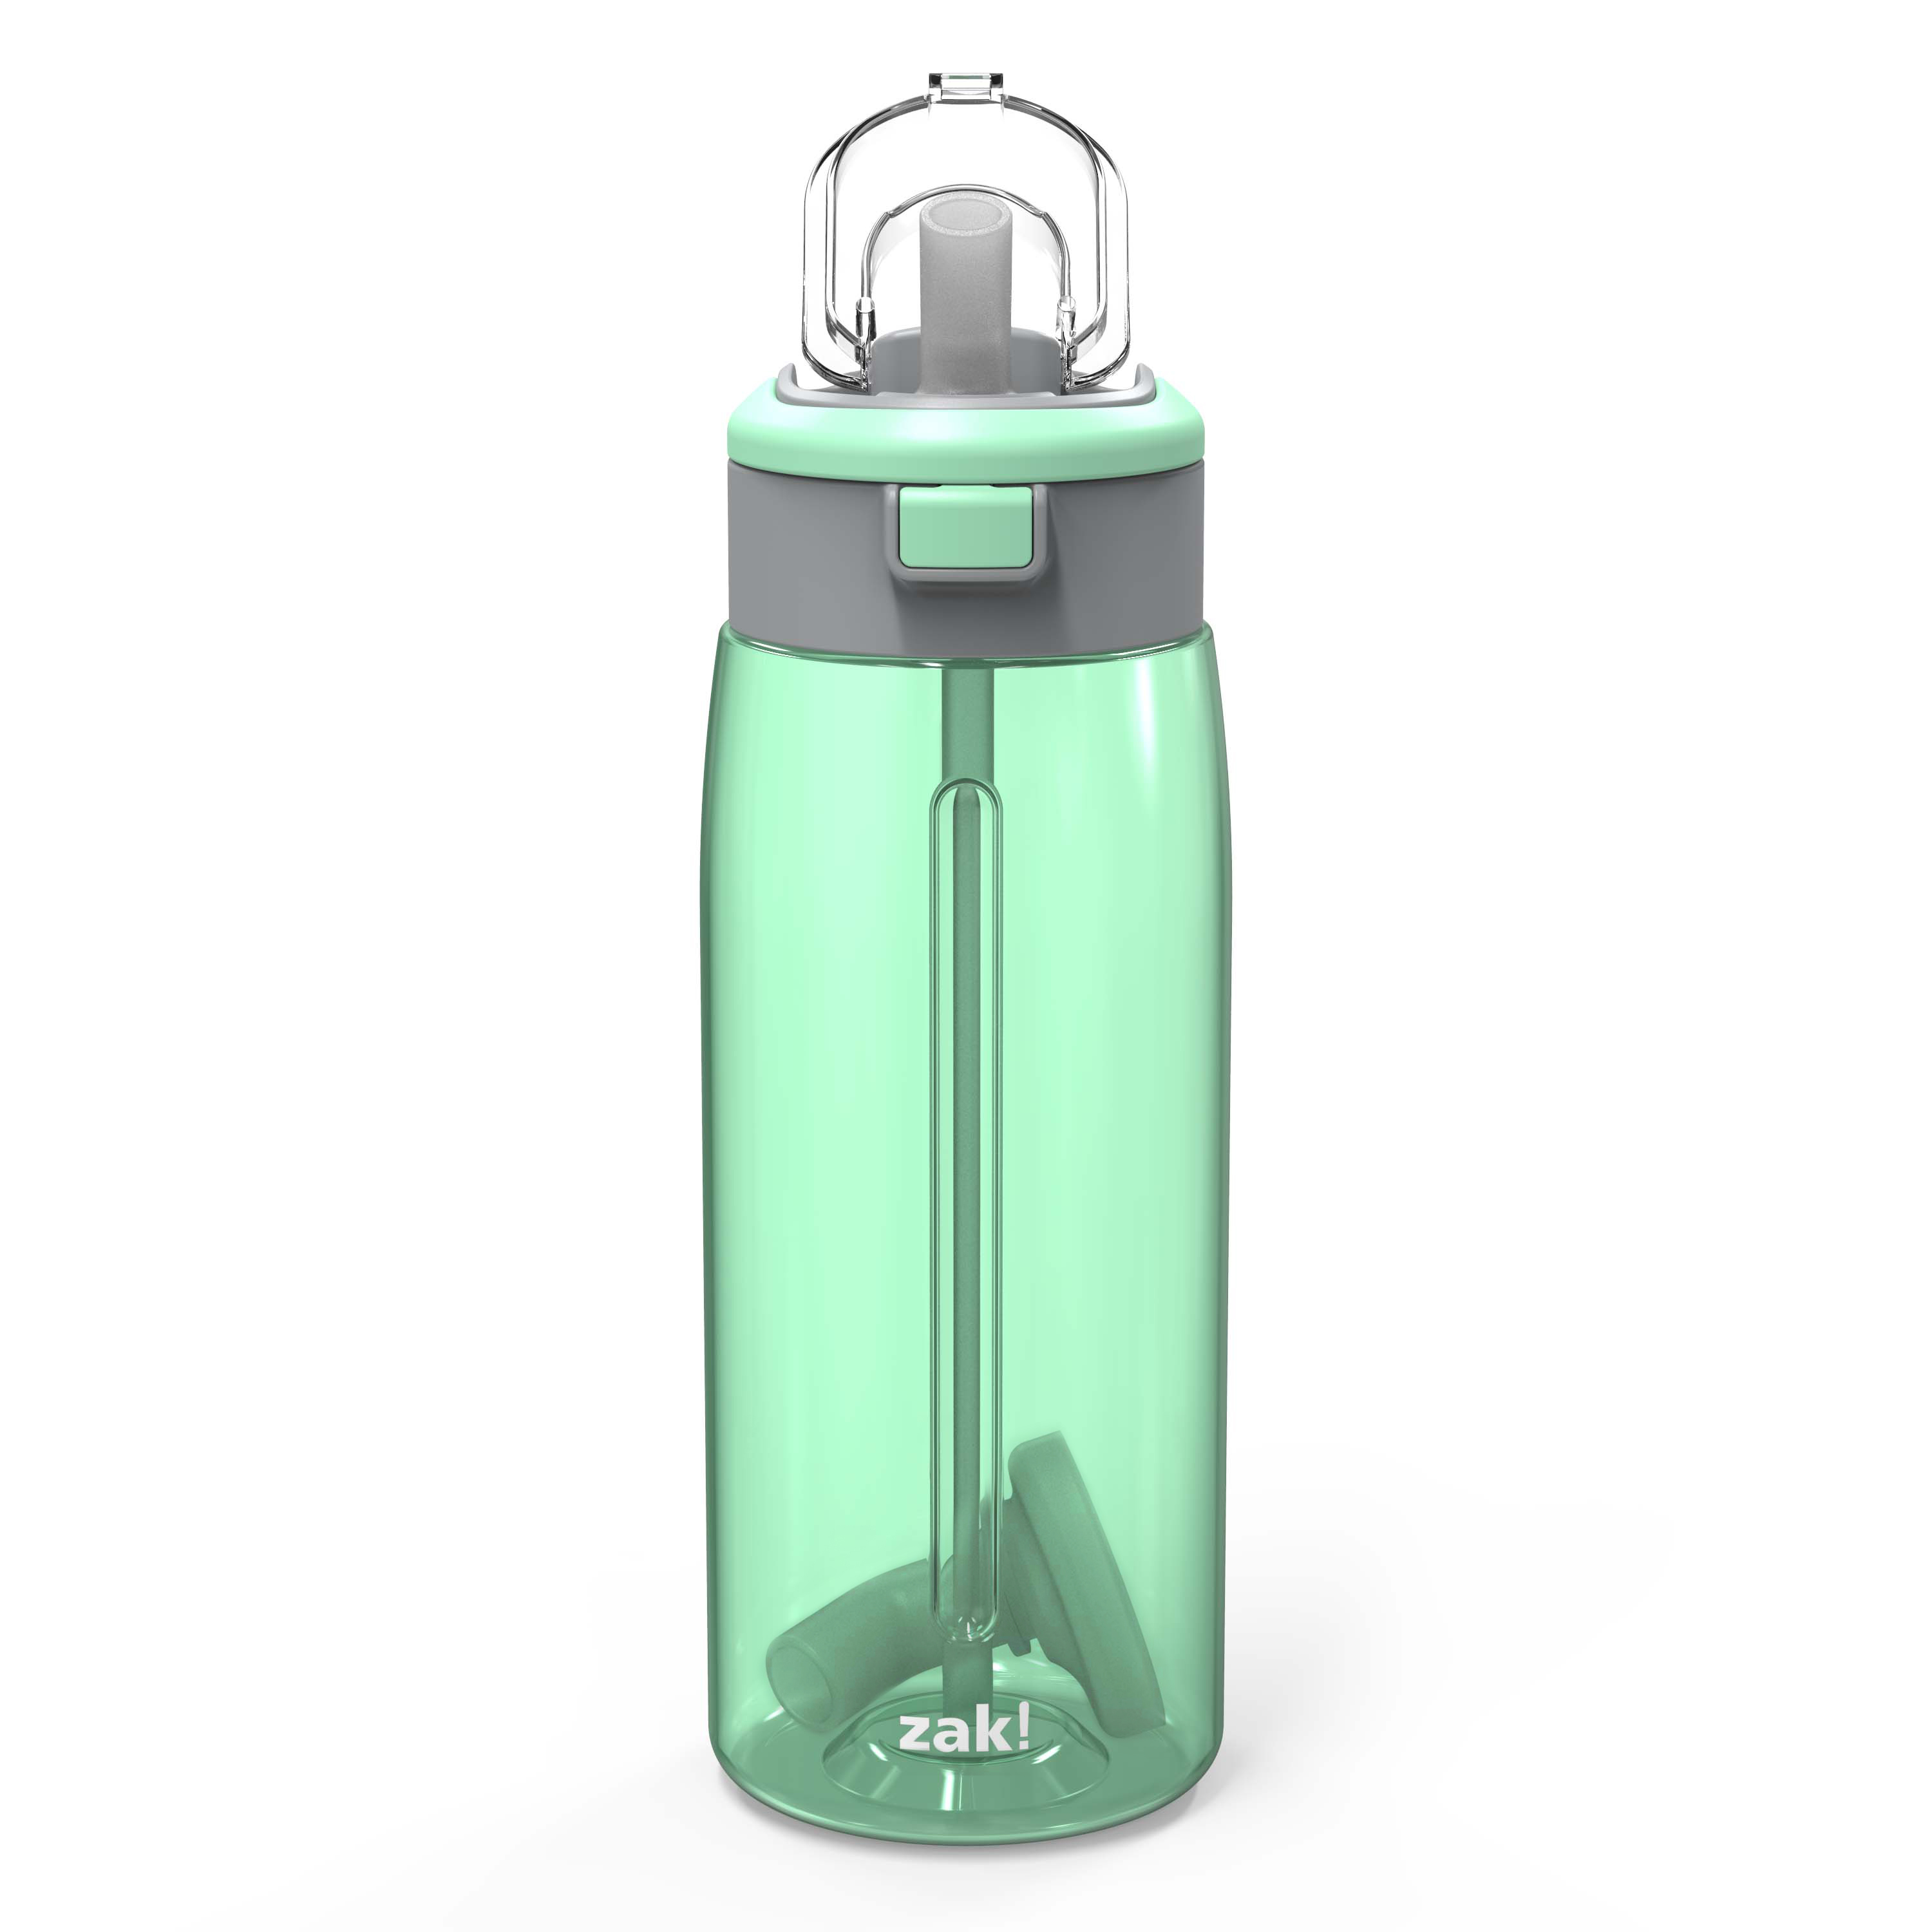 Genesis 32 ounce Reusable Plastic Water Bottle with Interchangeable Spouts, Neo Mint slideshow image 3